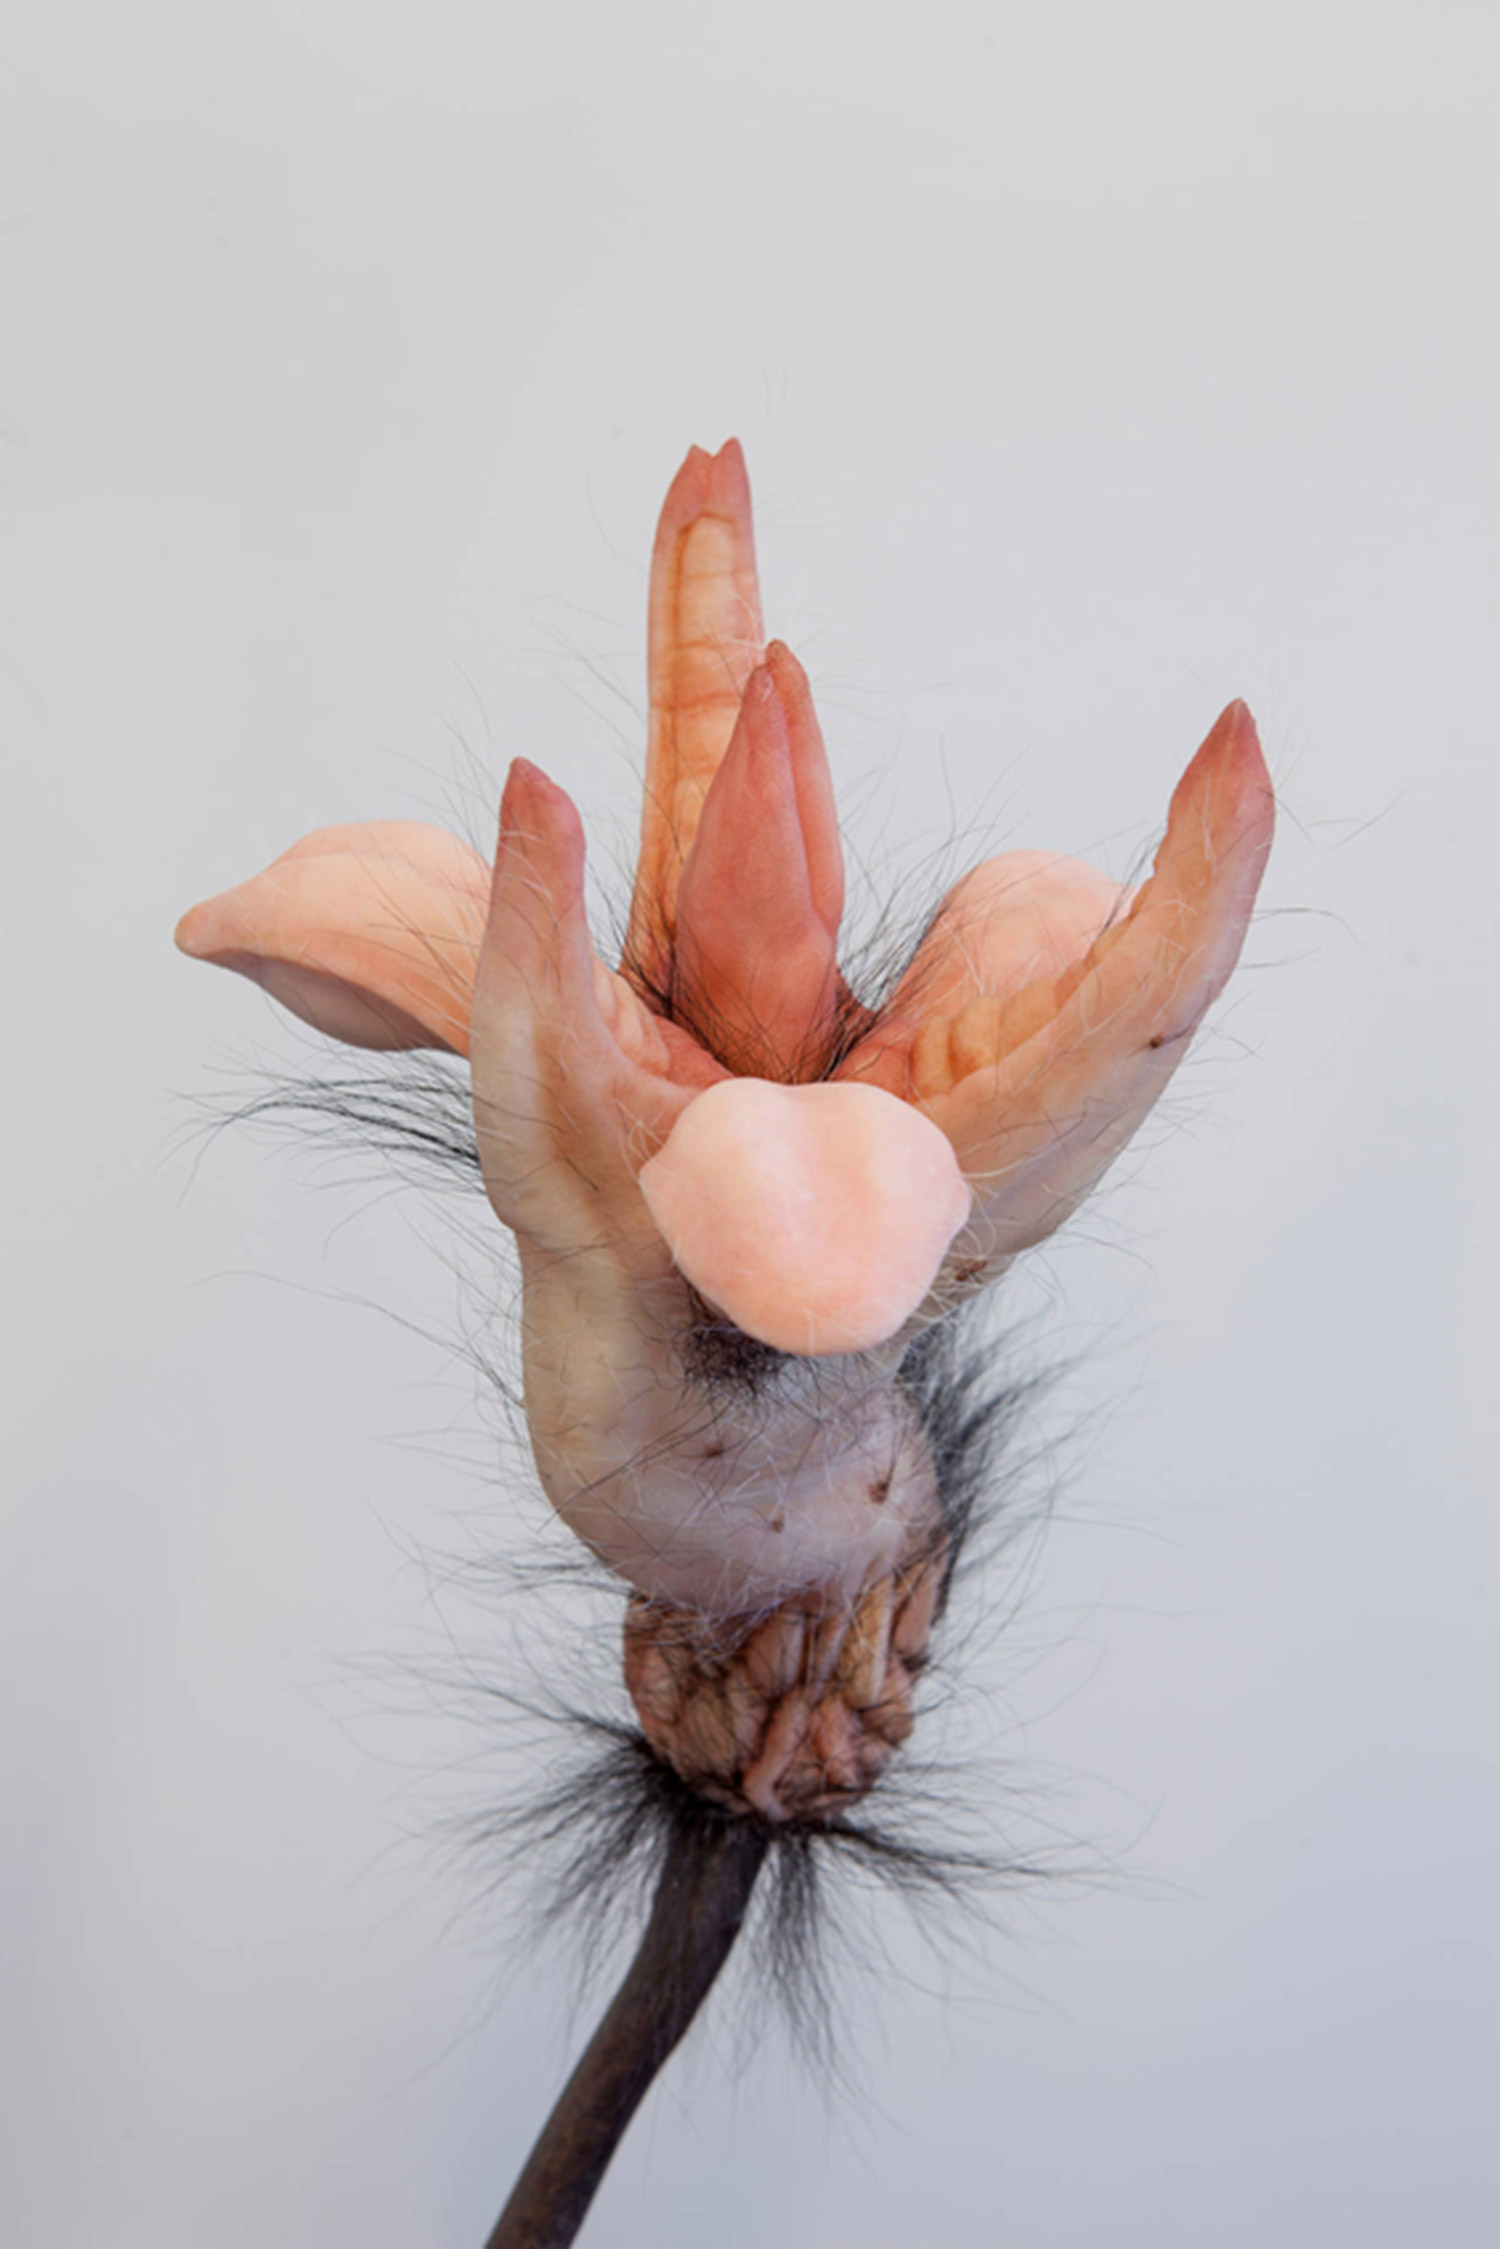 Patricia Piccinni, Metaflora (Twin Rivers Mouths) - fleshy flower sculpture